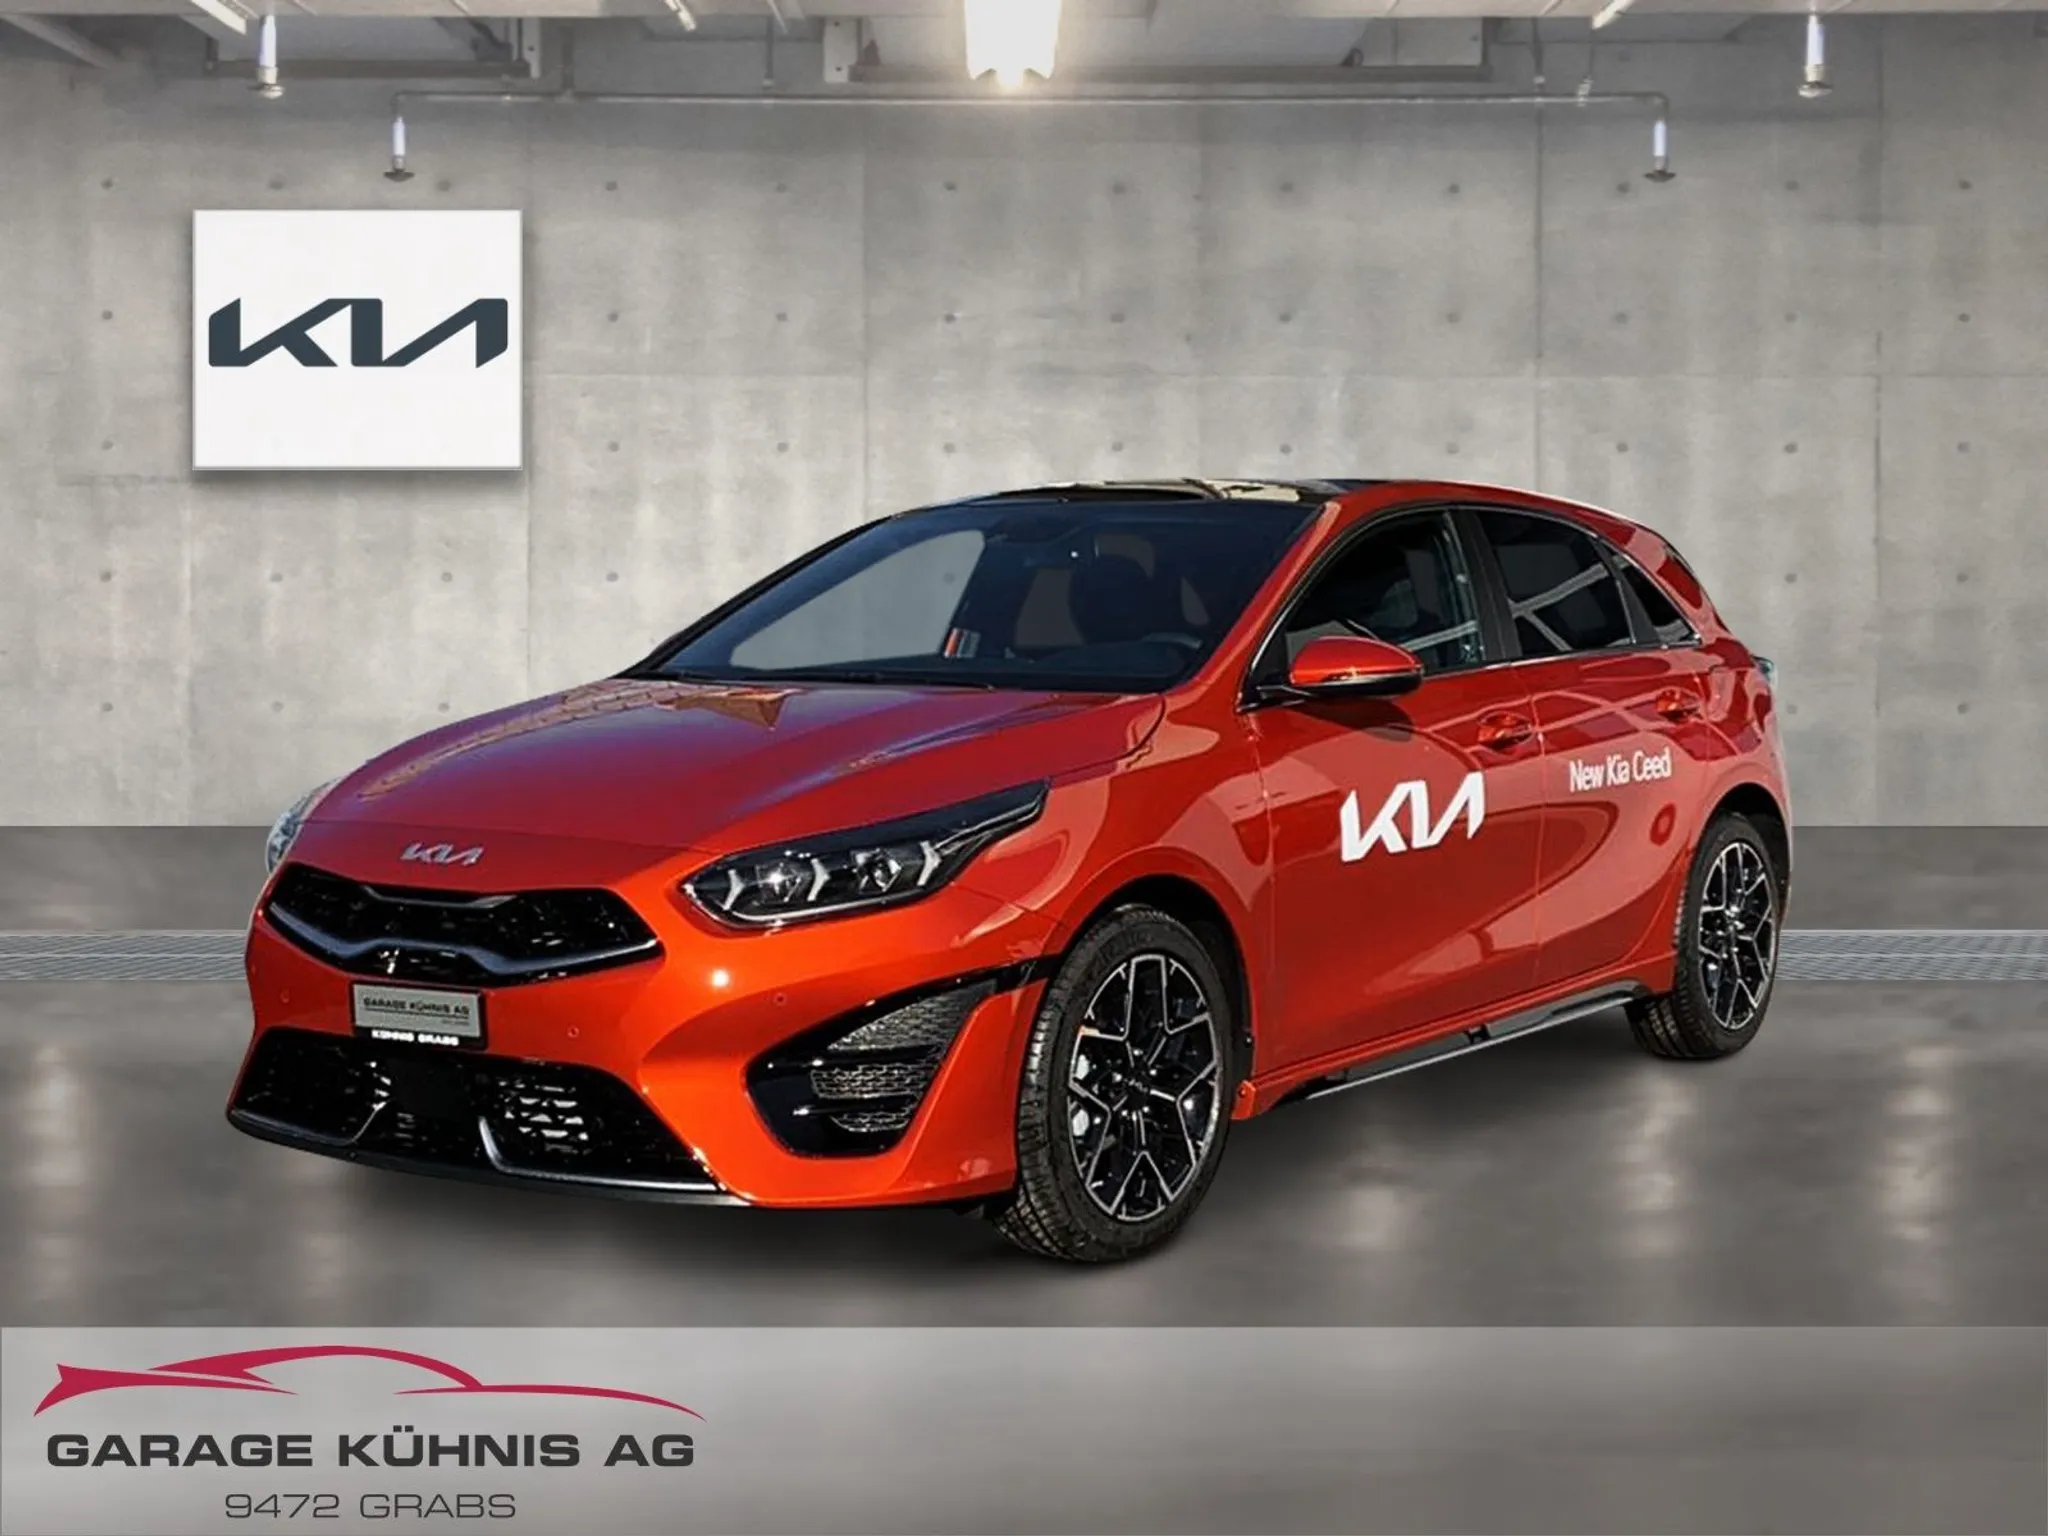 KIA-Ceed-car-image